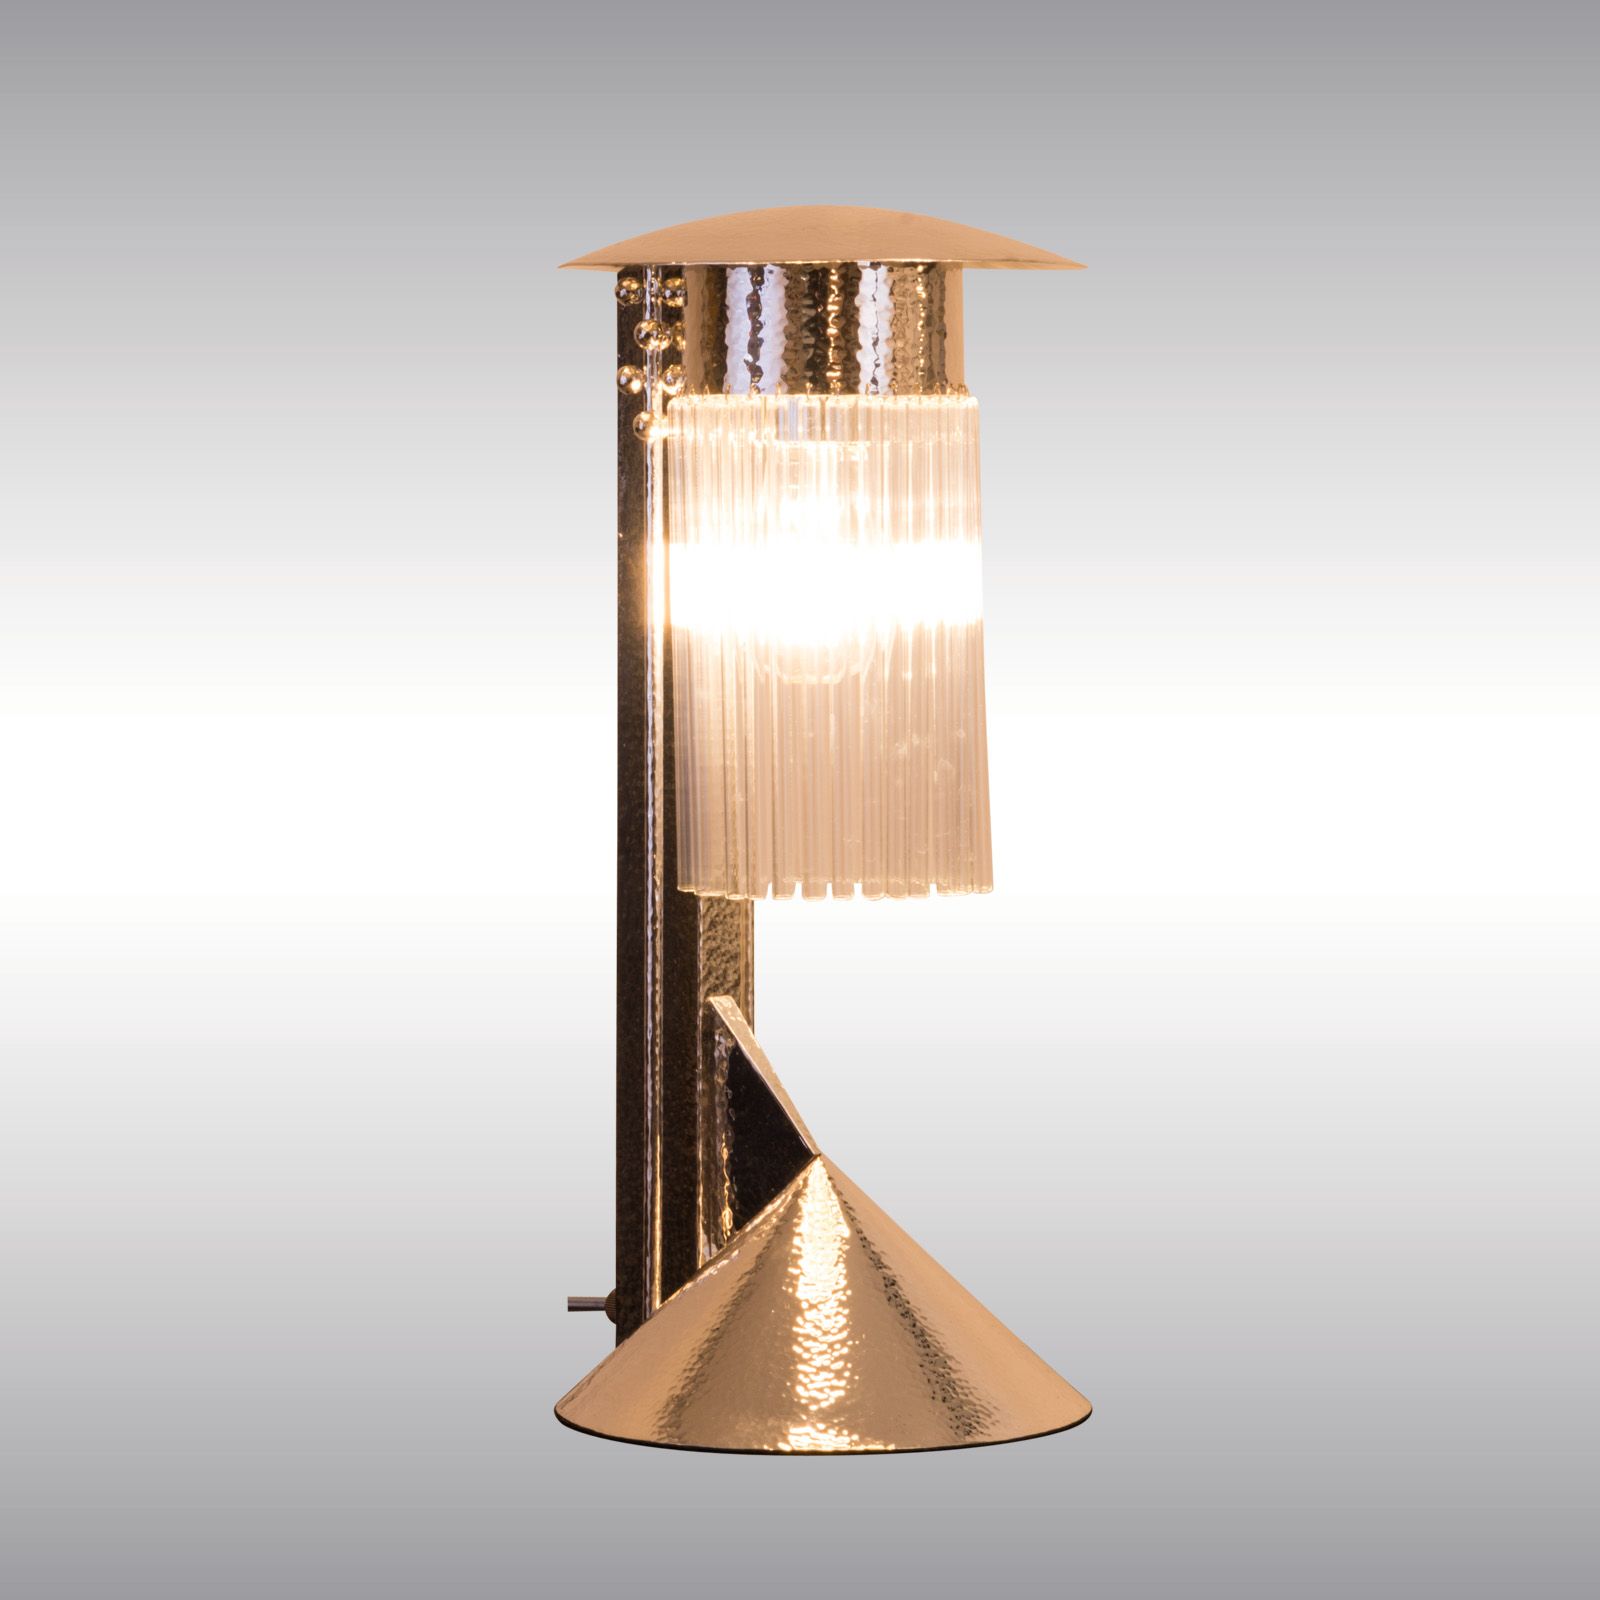 WOKA LAMPS VIENNA - OrderNr.: 22309|Kolo Moser Tischlampe Reininghaus - Design: Koloman (Kolo) Moser